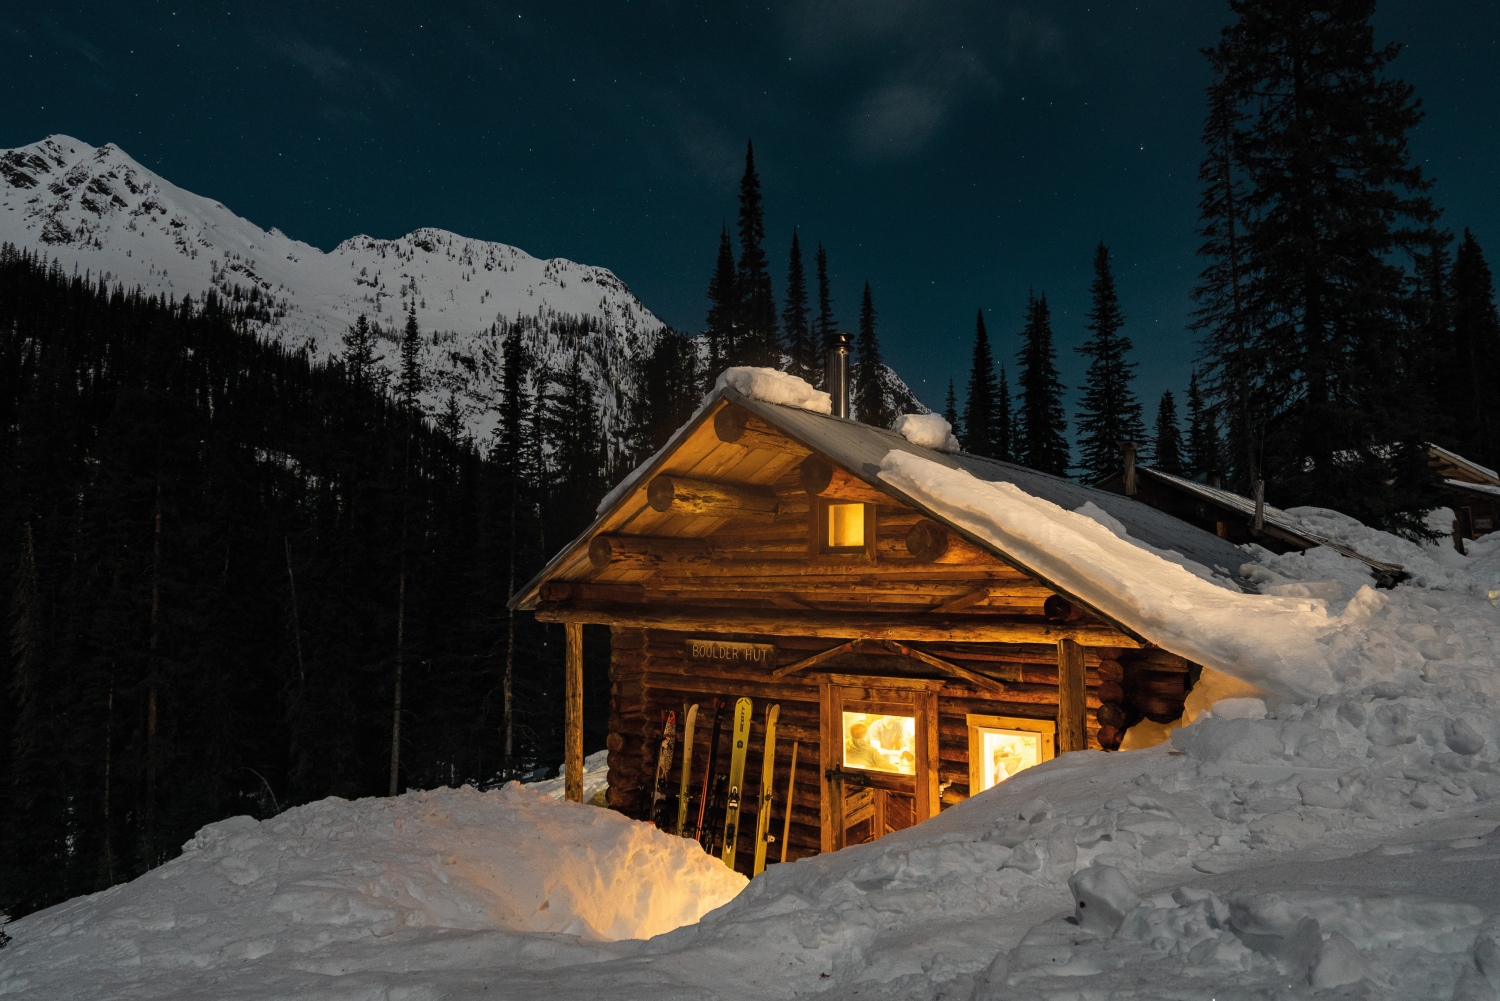 snowy cabin at night